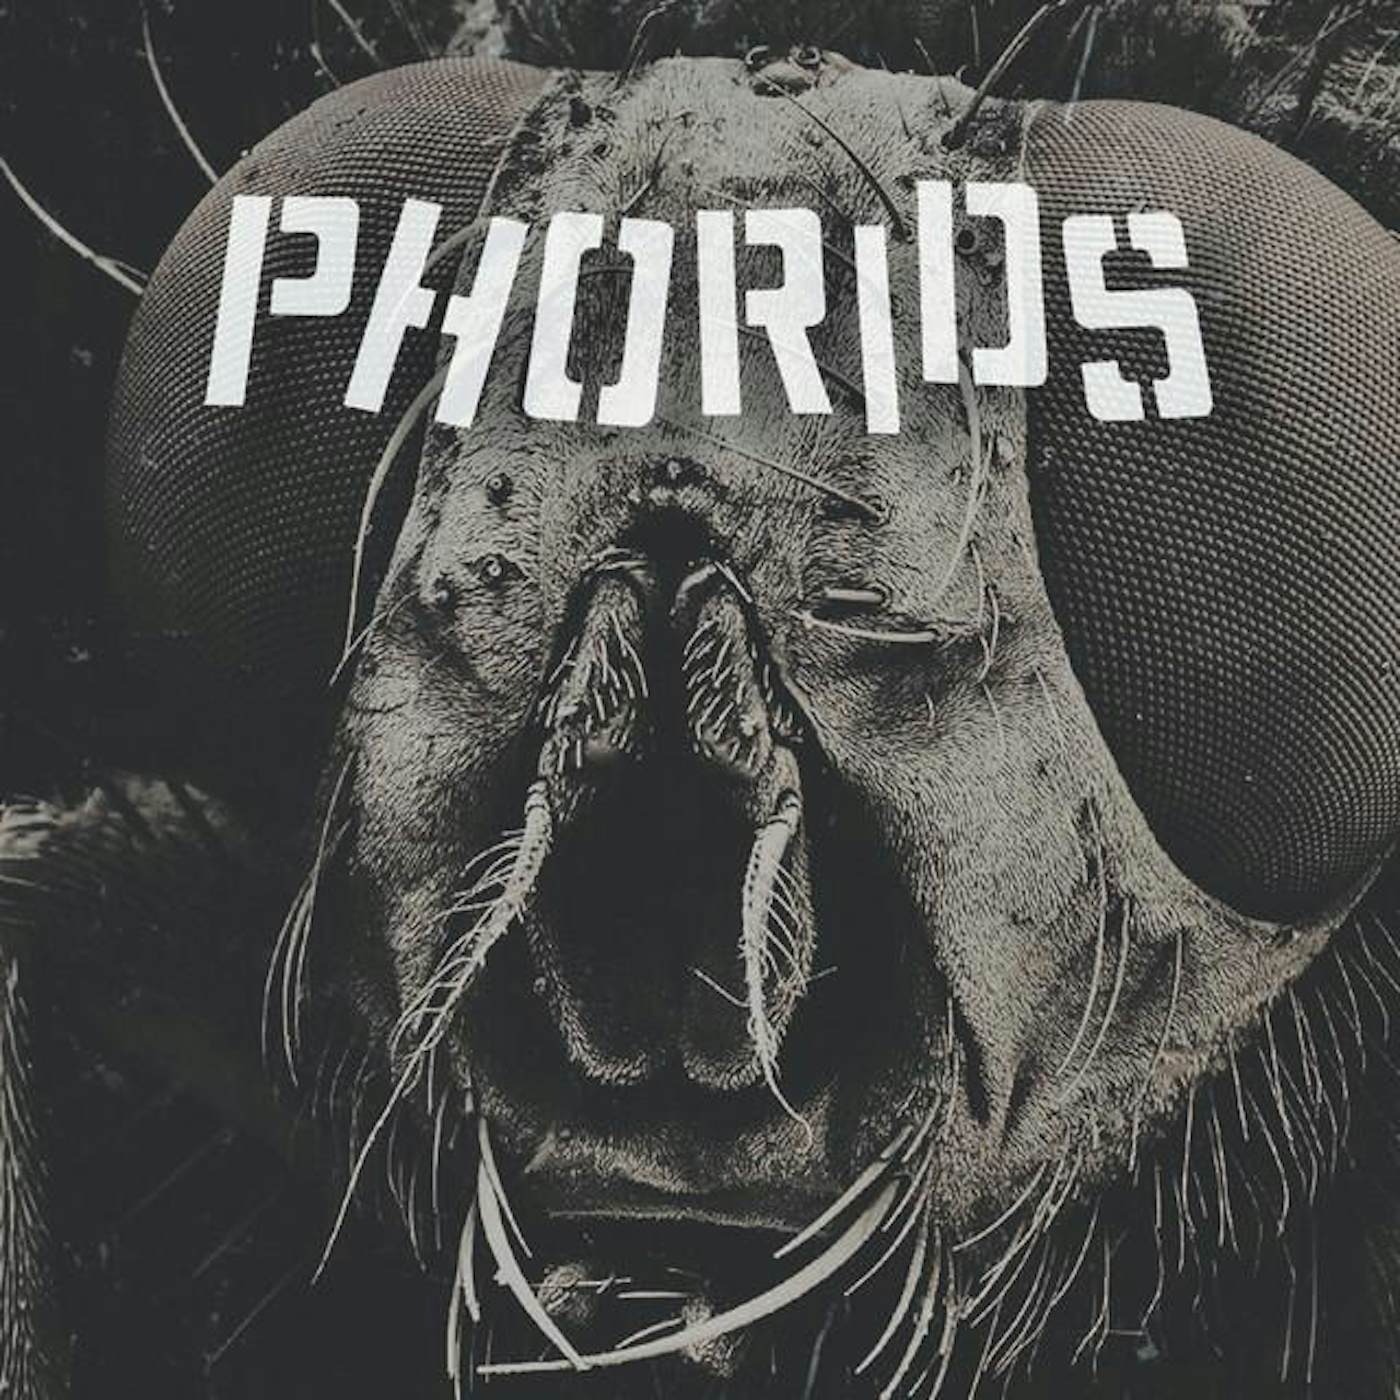 Phorids